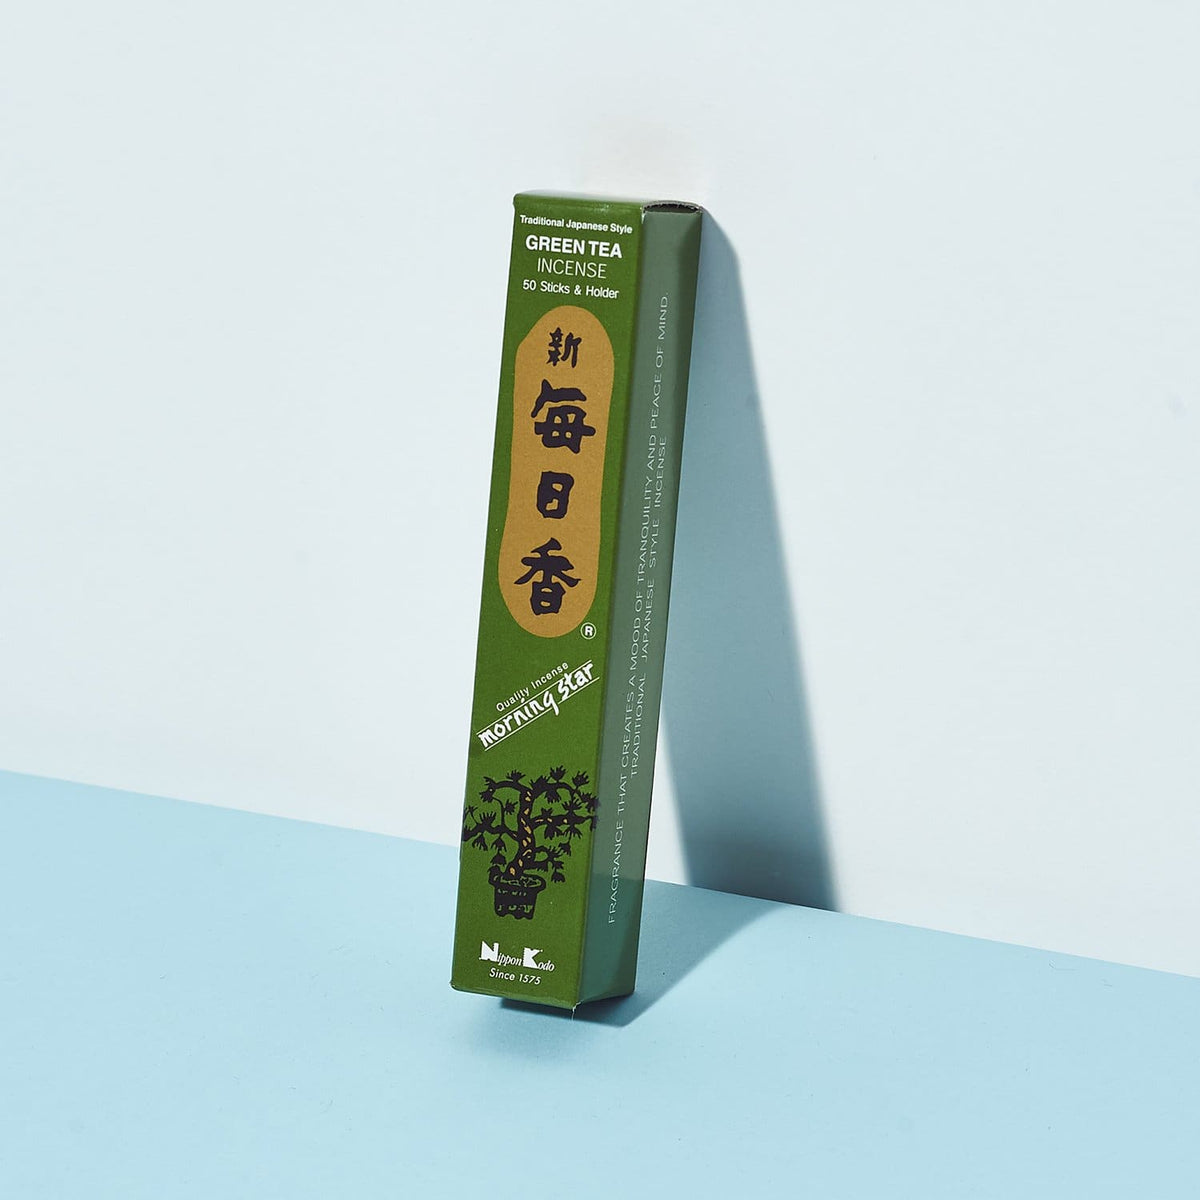 Morning Star Incense 50 Sticks - Green Tea Incense - 